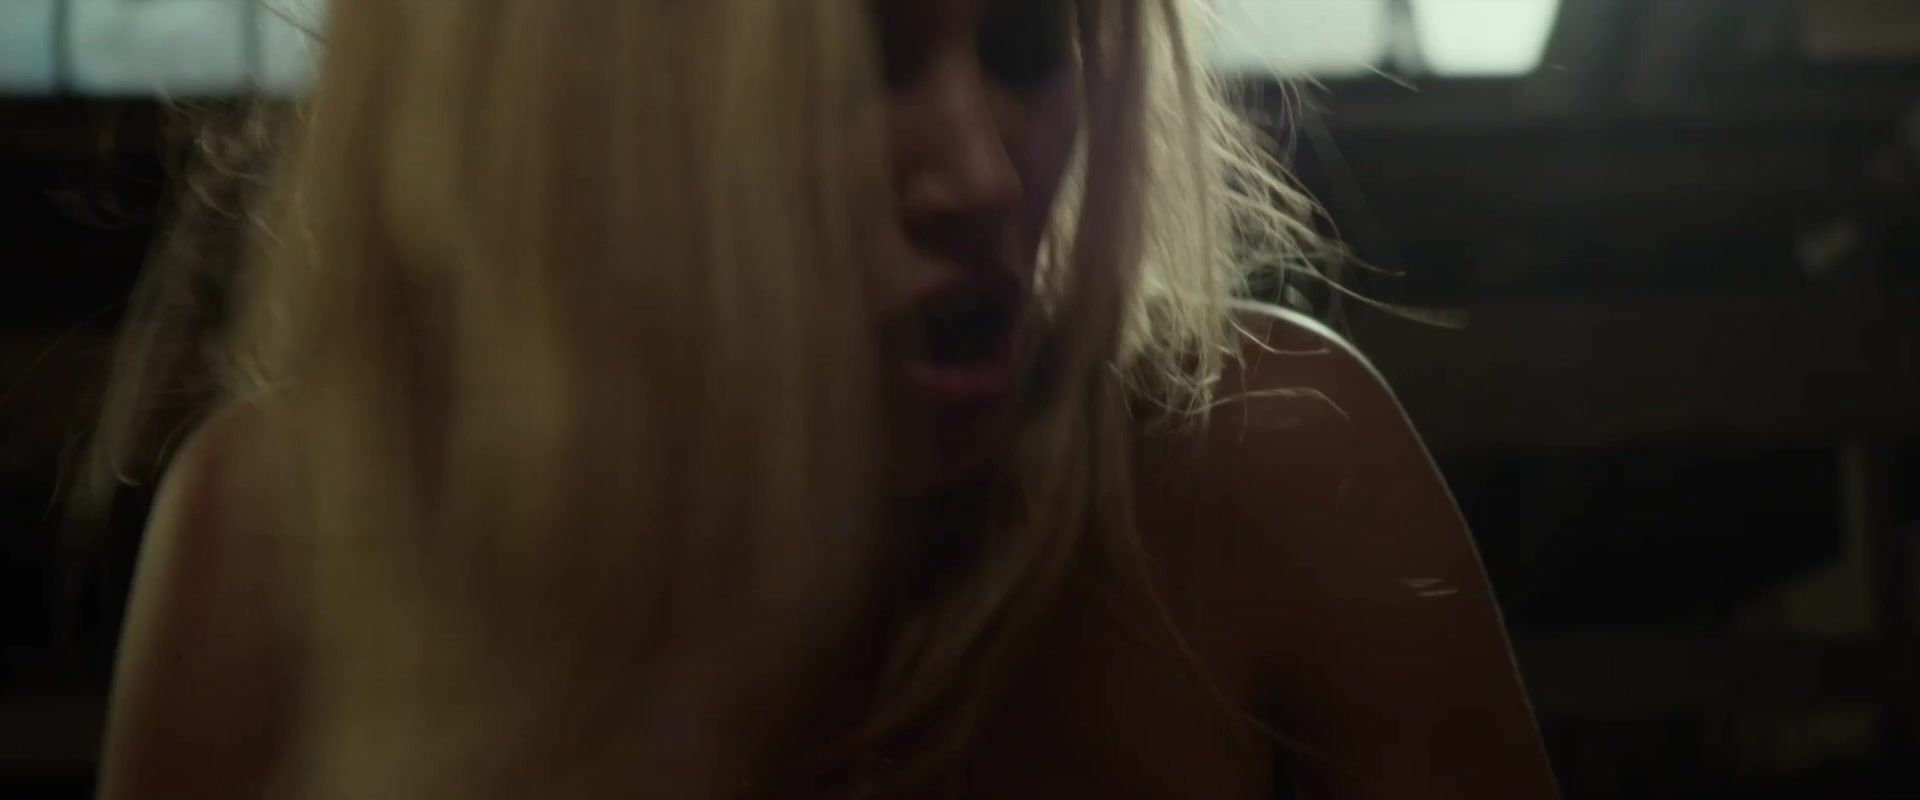 Veronica Avluv Melissa Benoist nude - Billy Boy (2017) Yes